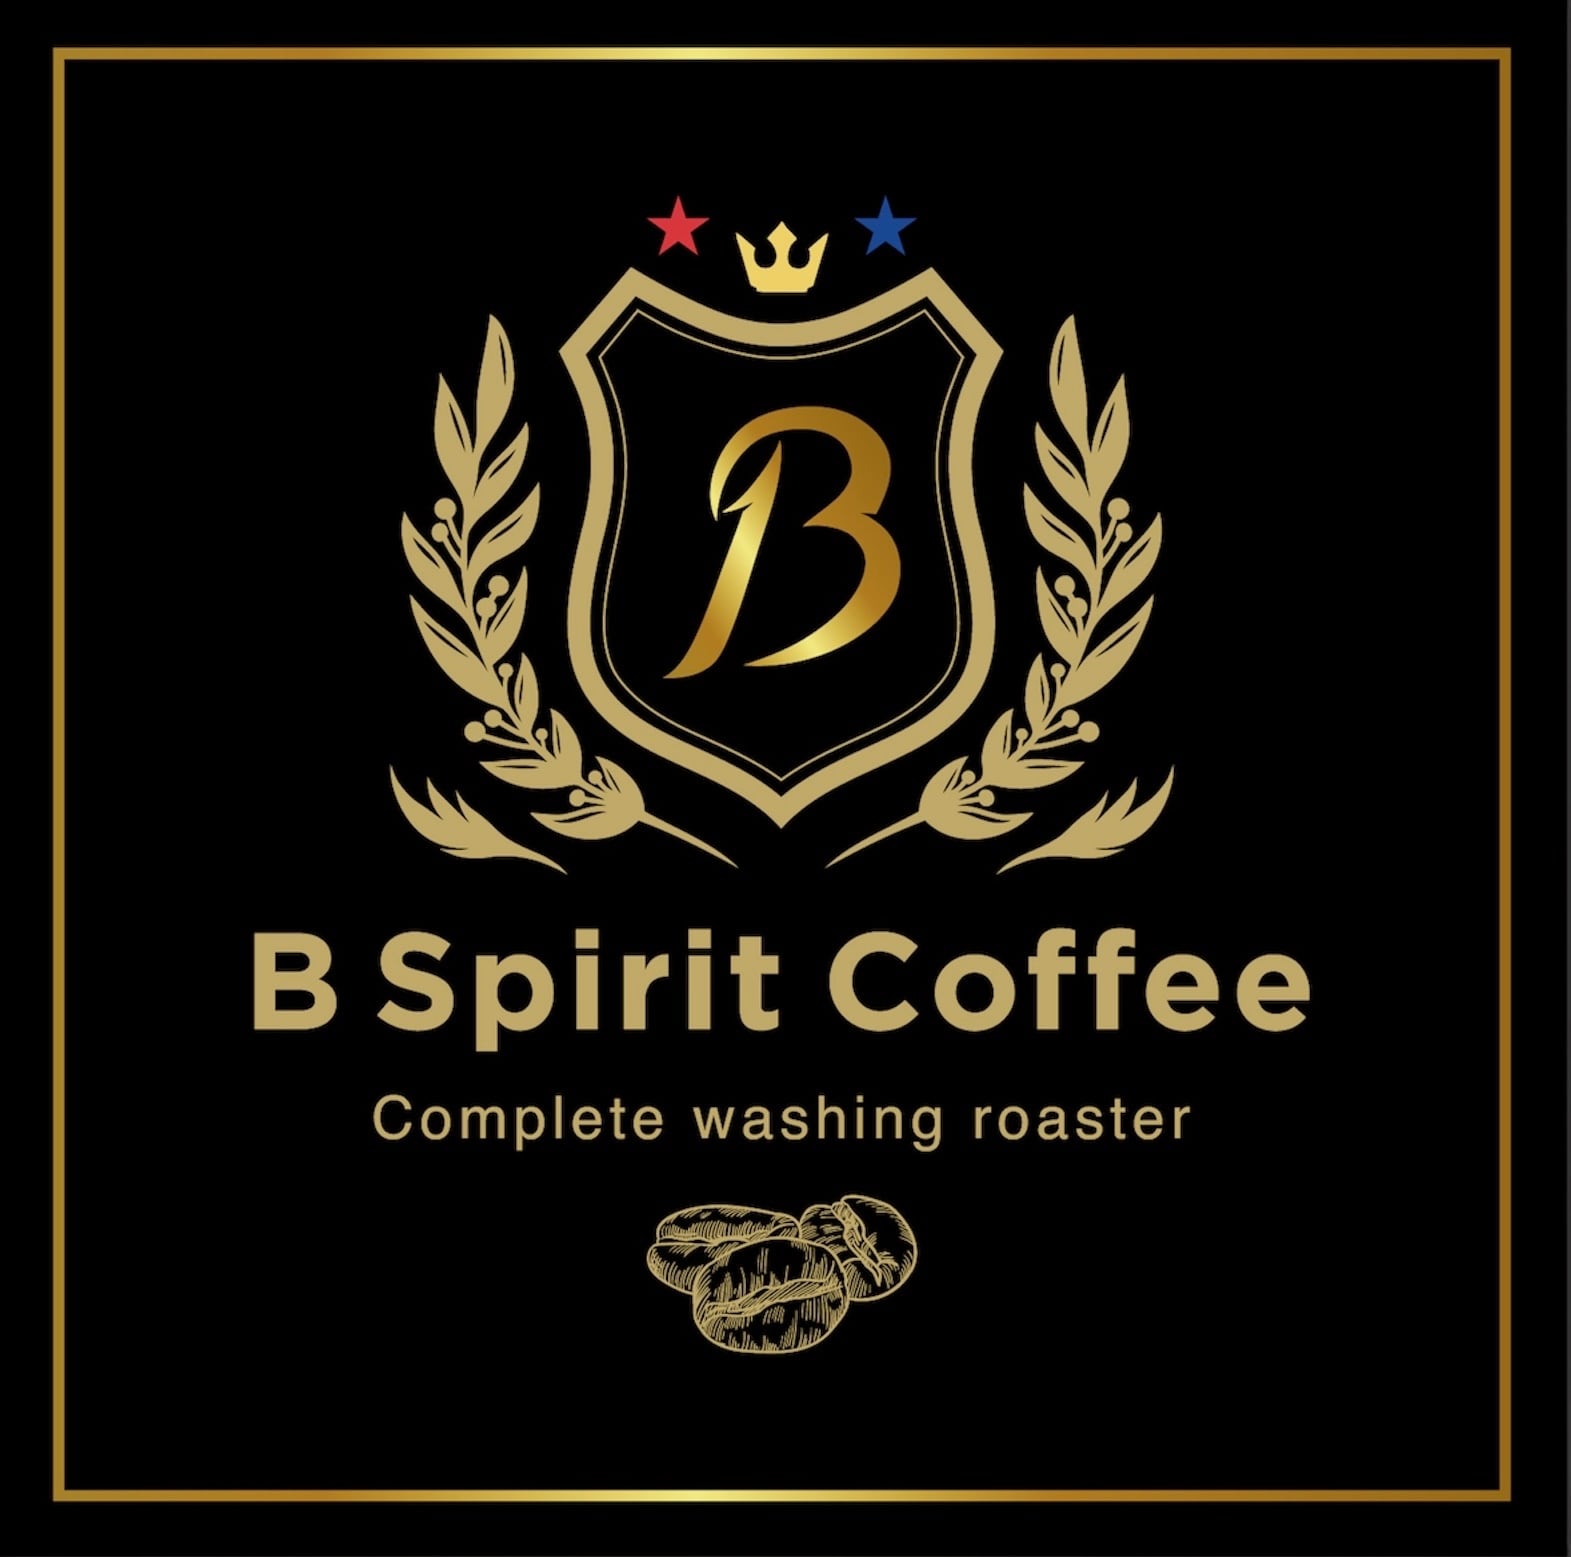 B Spirit Coffee